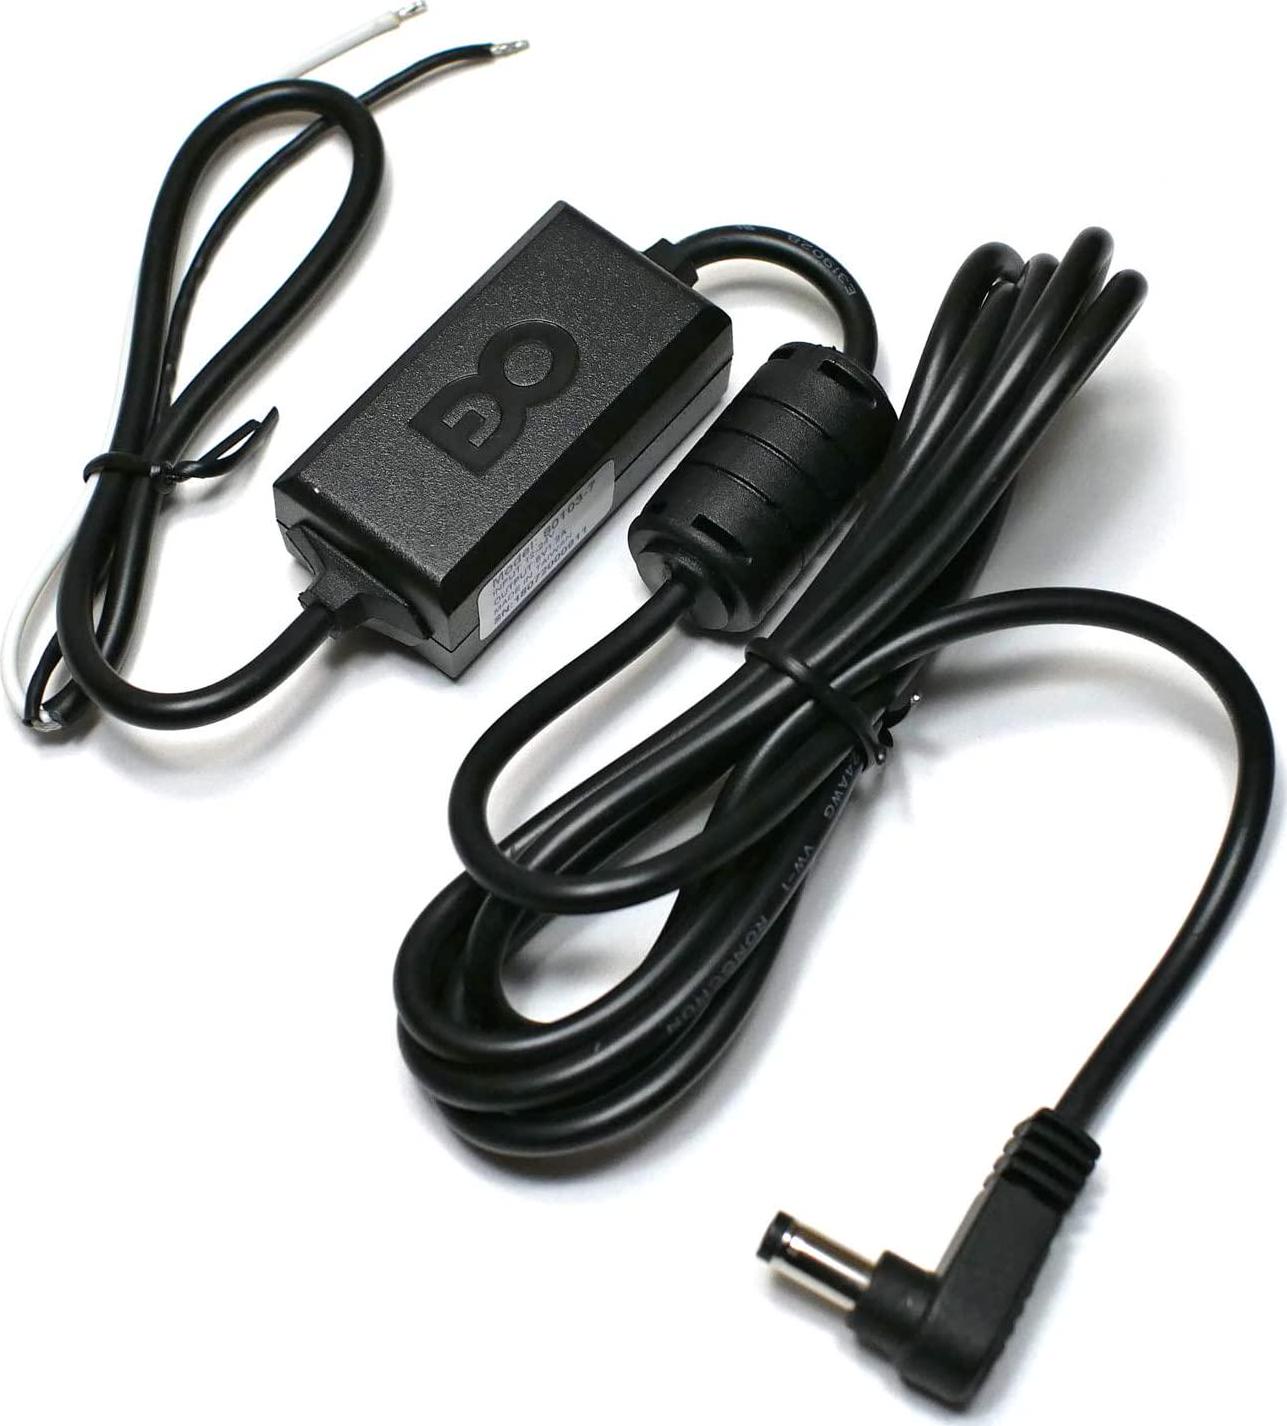 EDOTech, EDO TechÂ Direct Hardwire Vehicle 5V Power Cord Adapter Kit for Sirius XM Radio PowerConnect Dock Onyx Edge Lynx Stratus Starmate